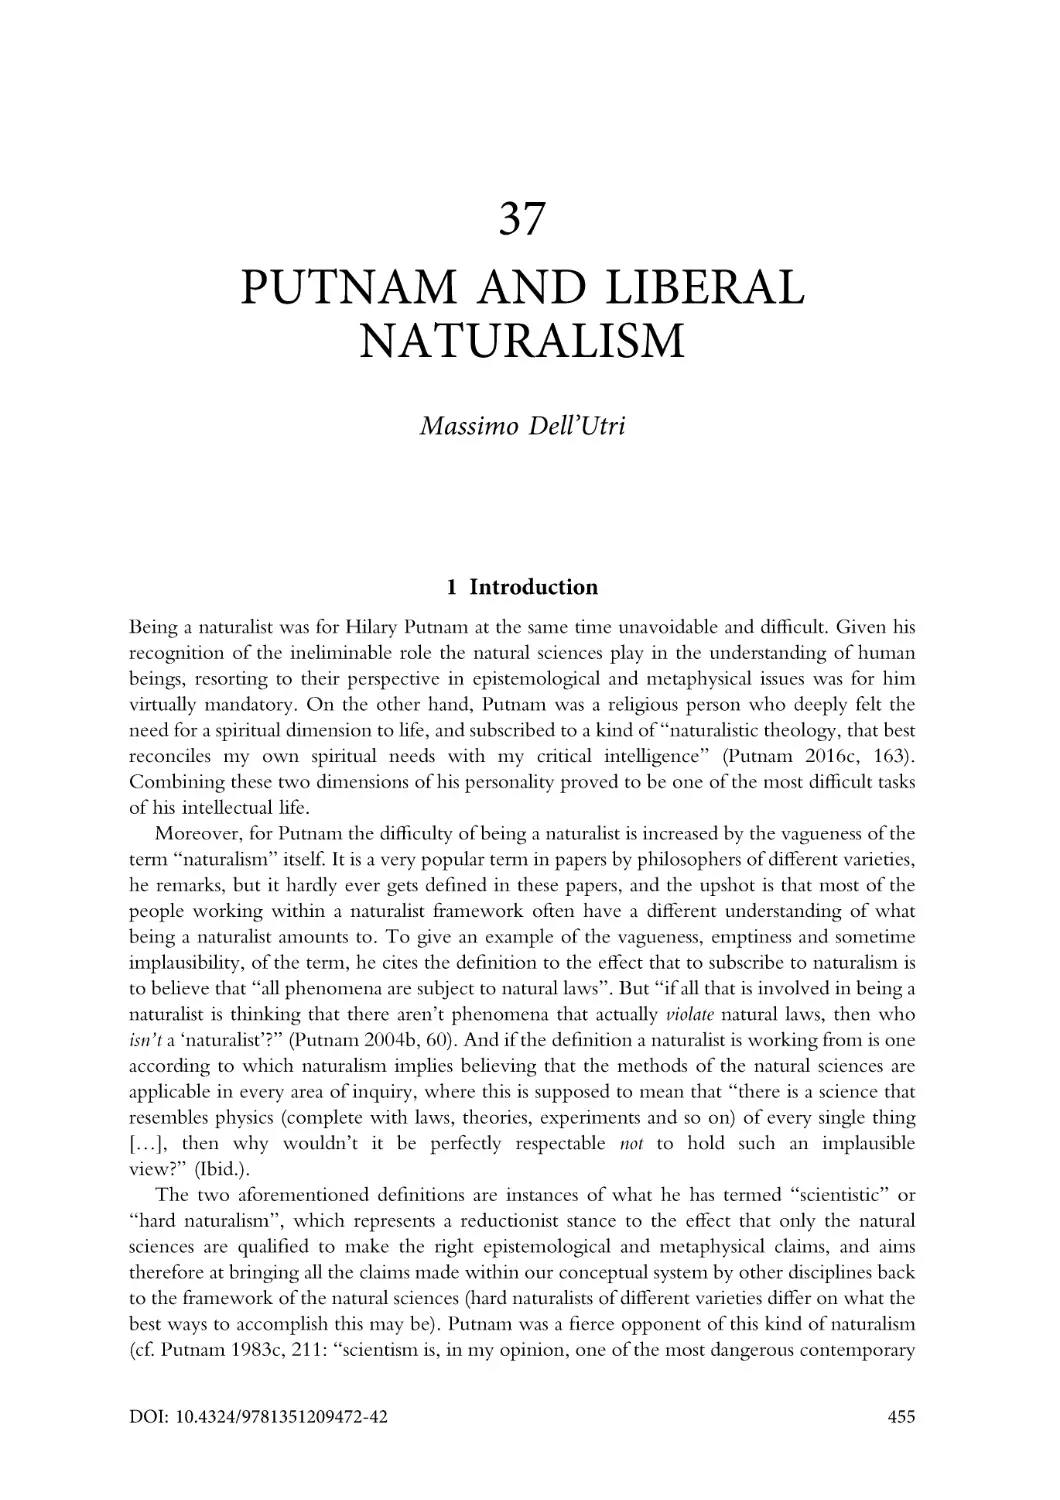 37. Putnam and liberal naturalism
1. Introduction